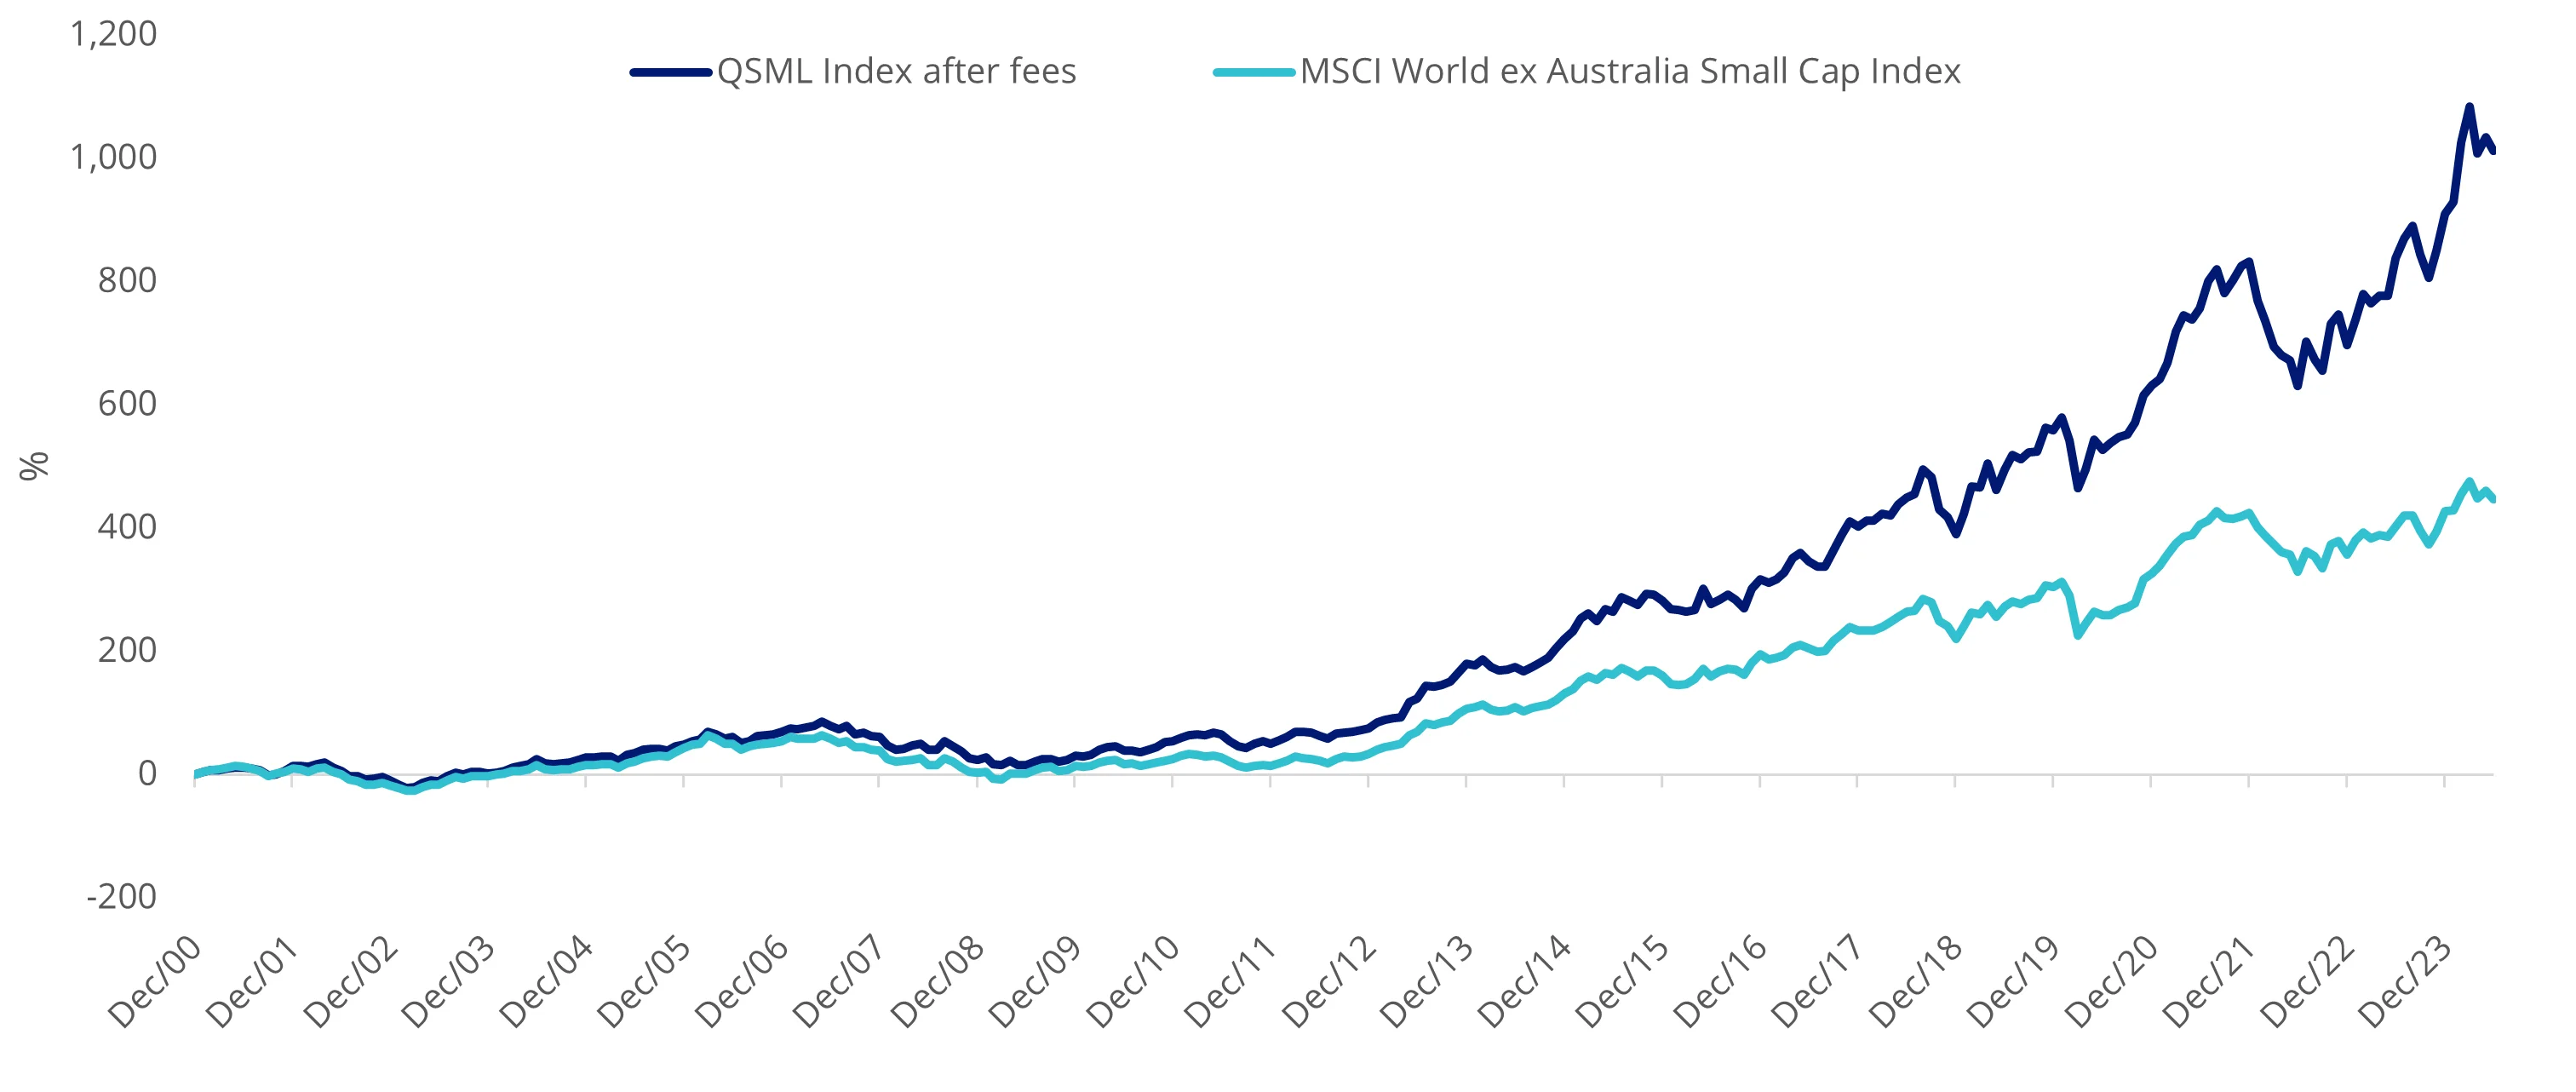 Modelled cumulative performance: QSML Index after fees1vs MSCI World ex Australia Small Cap Index